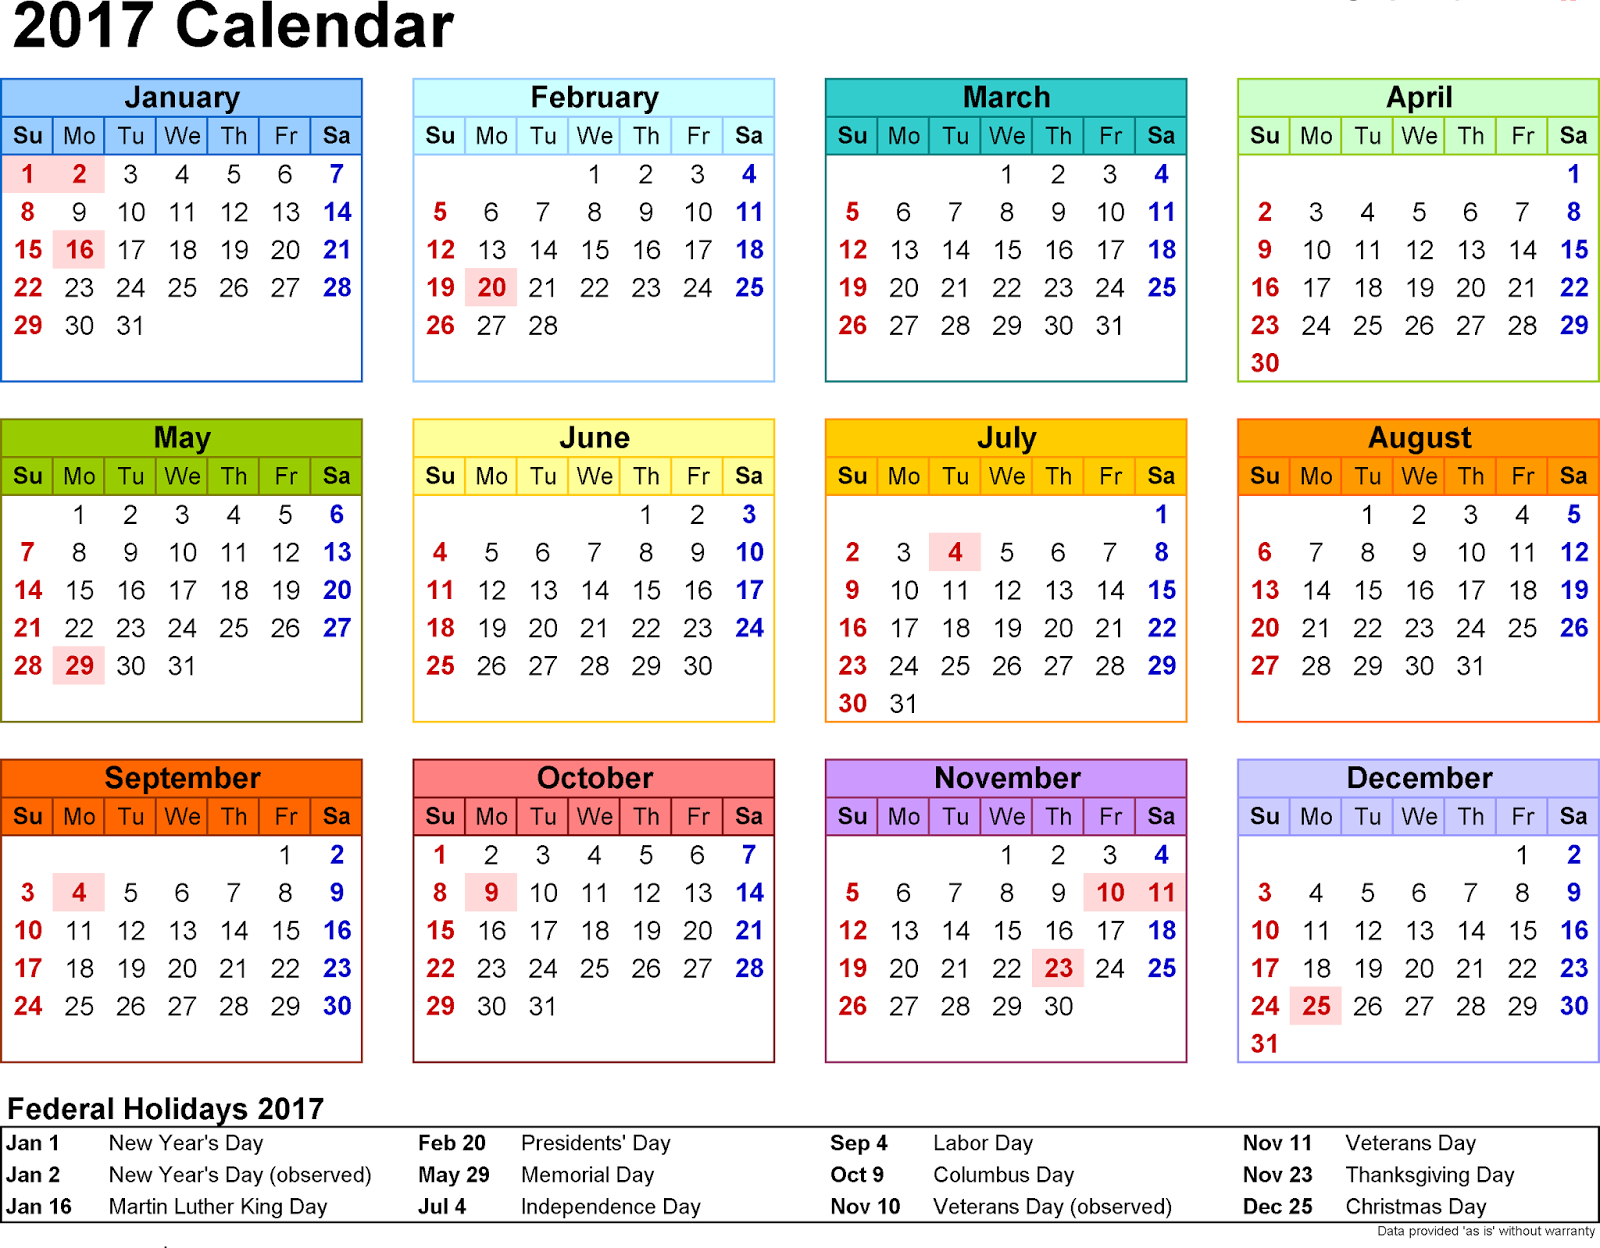 Islamic Calendar 2017 with Muslim Holidays